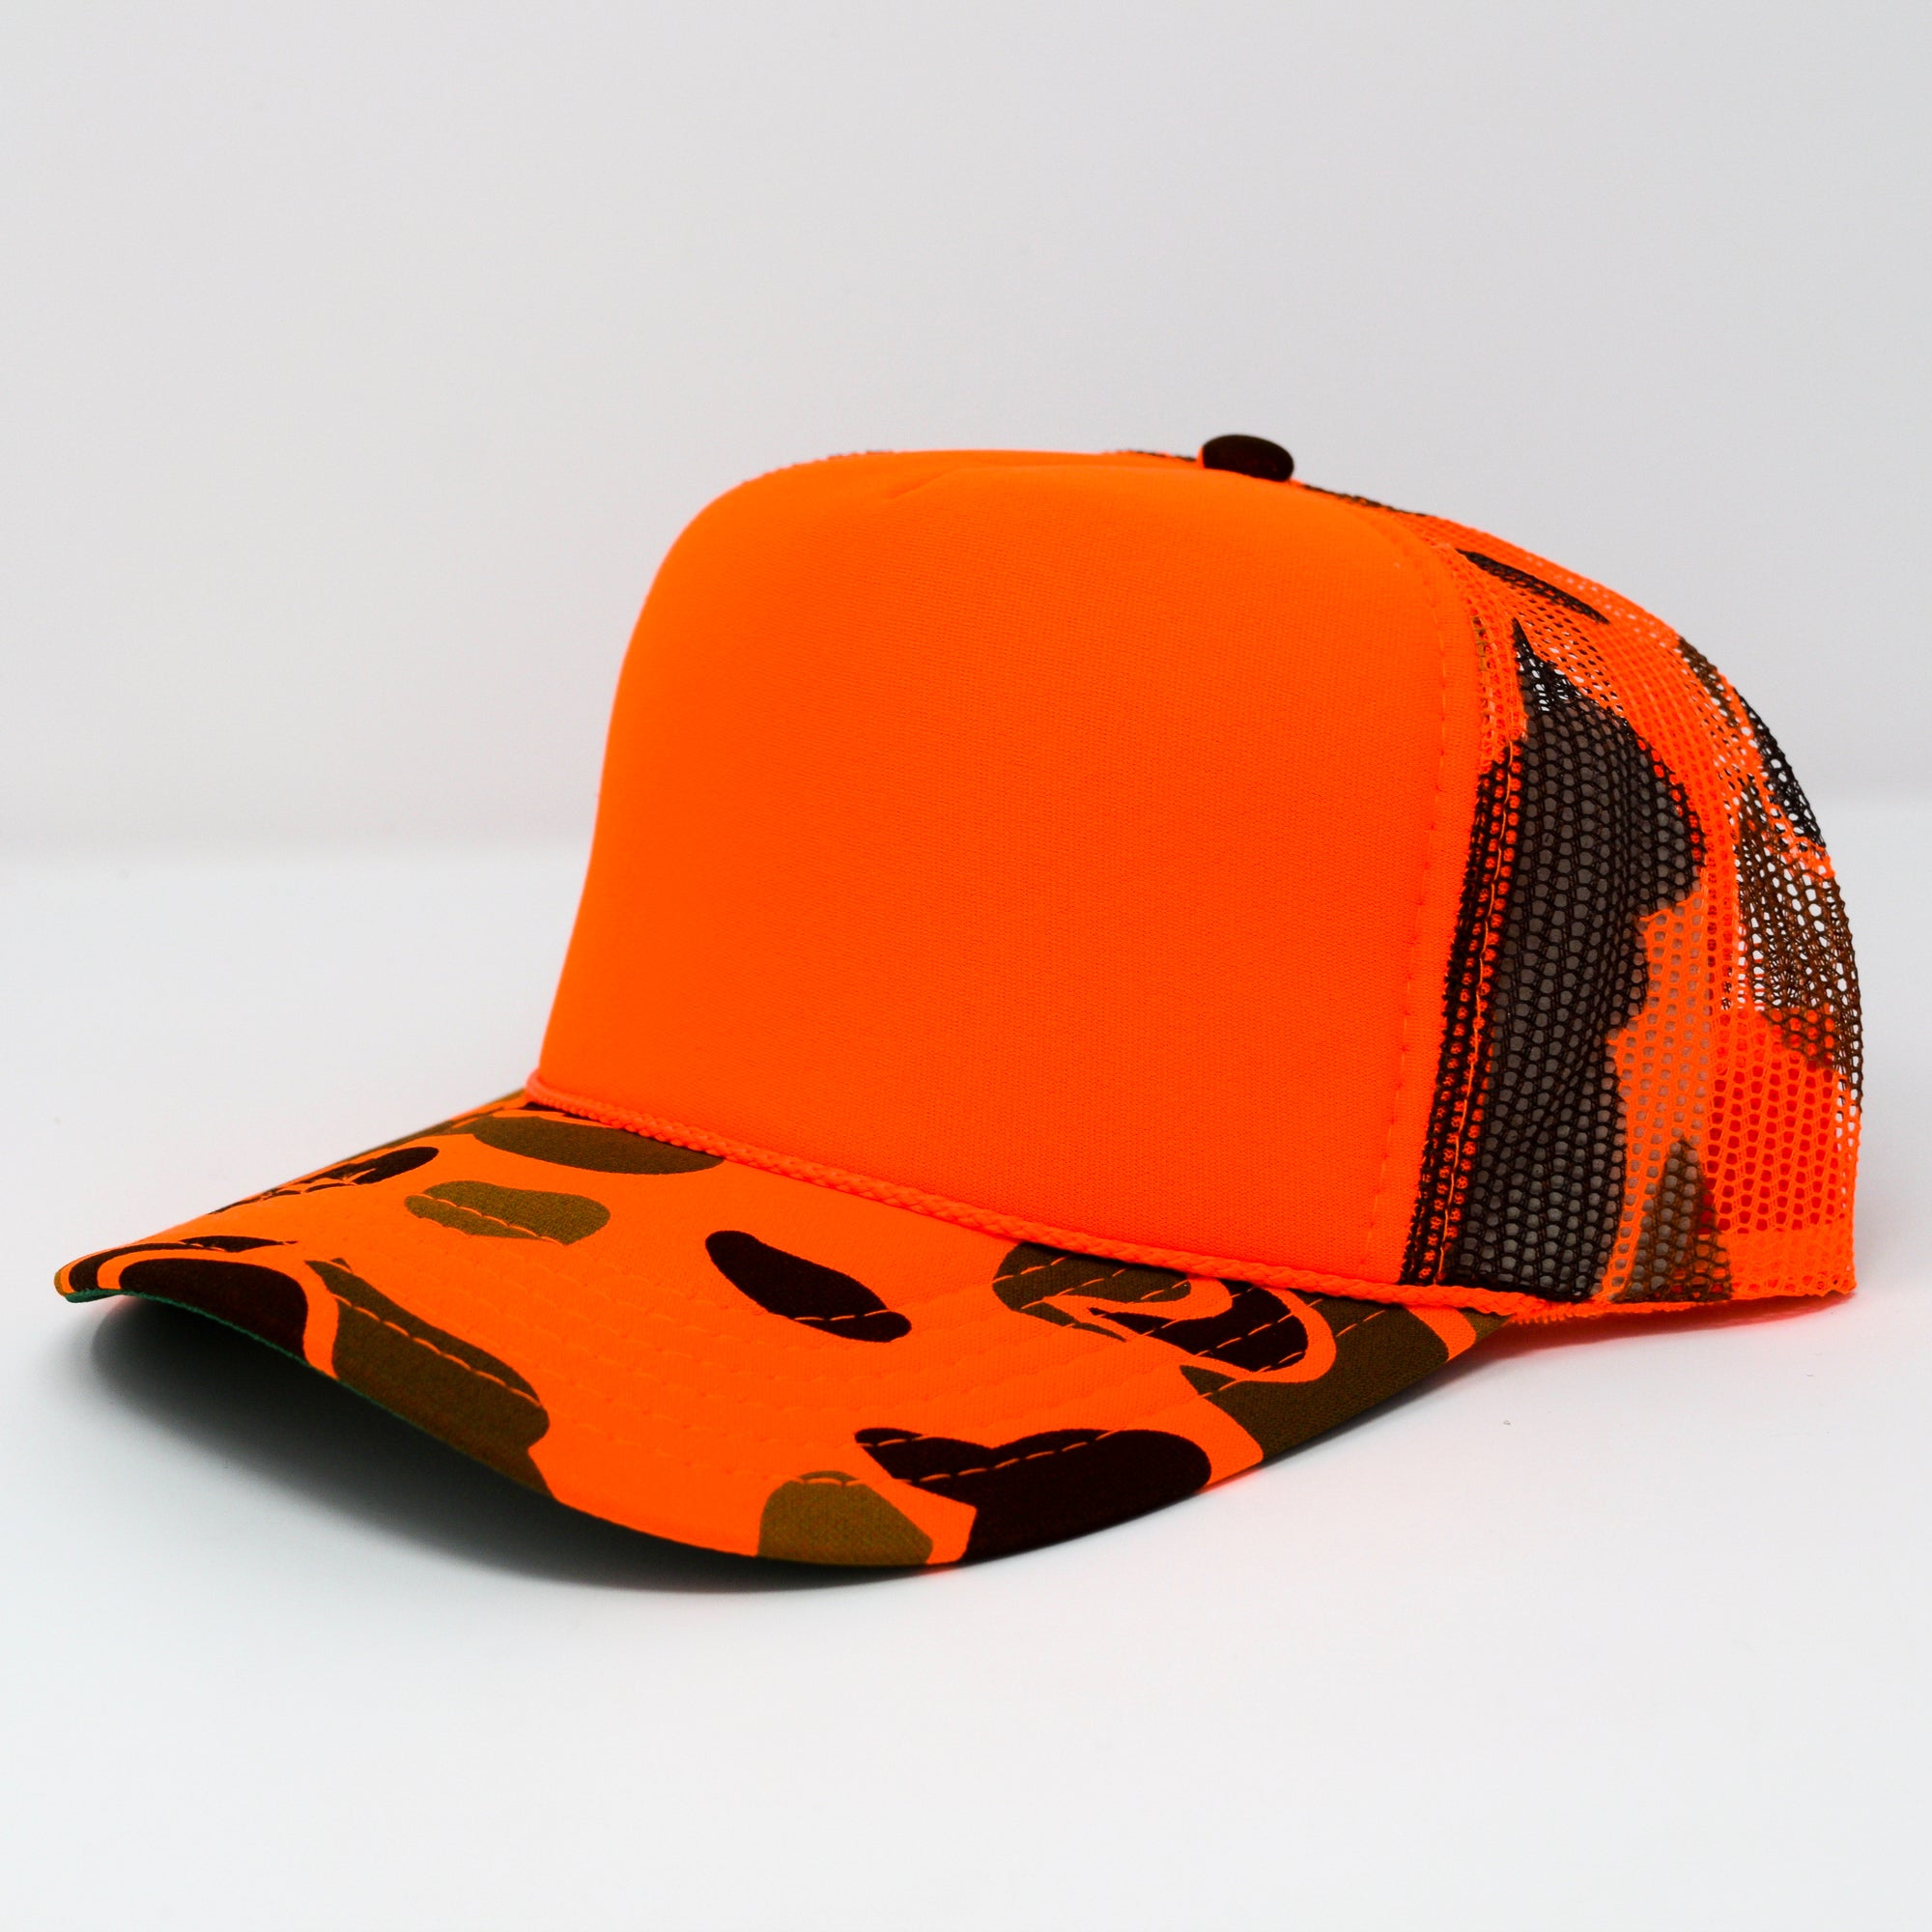 Retro Trucker Cap for Sublimation Camo Colors, 12 Each - Orange/Camo